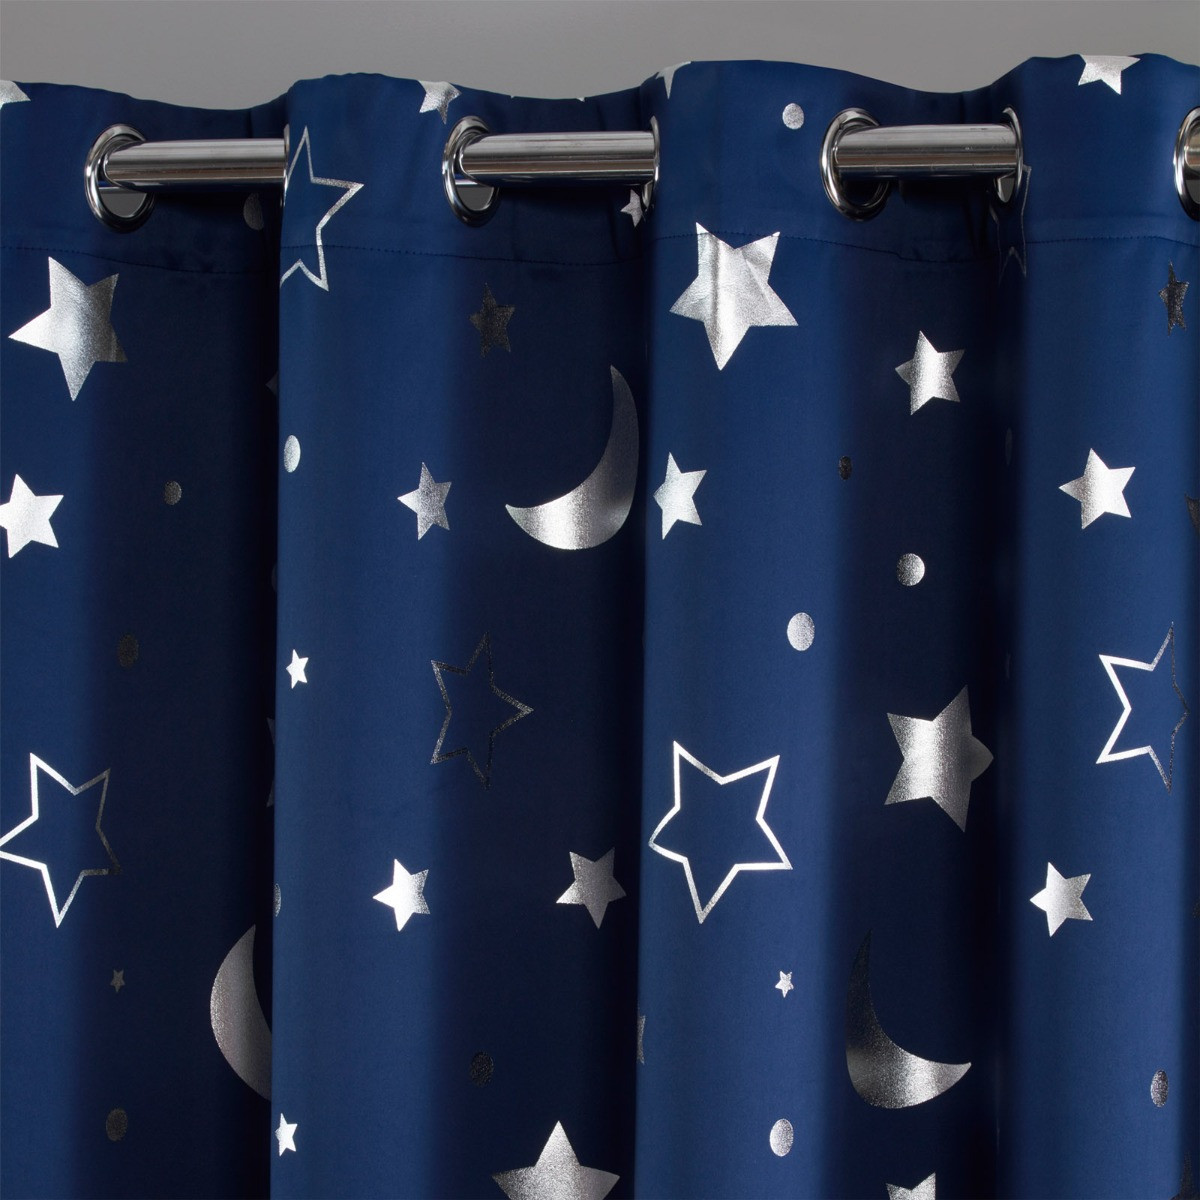 Dreamscene Star Galaxy Blackout Curtains Grommet Top - Navy Blue>